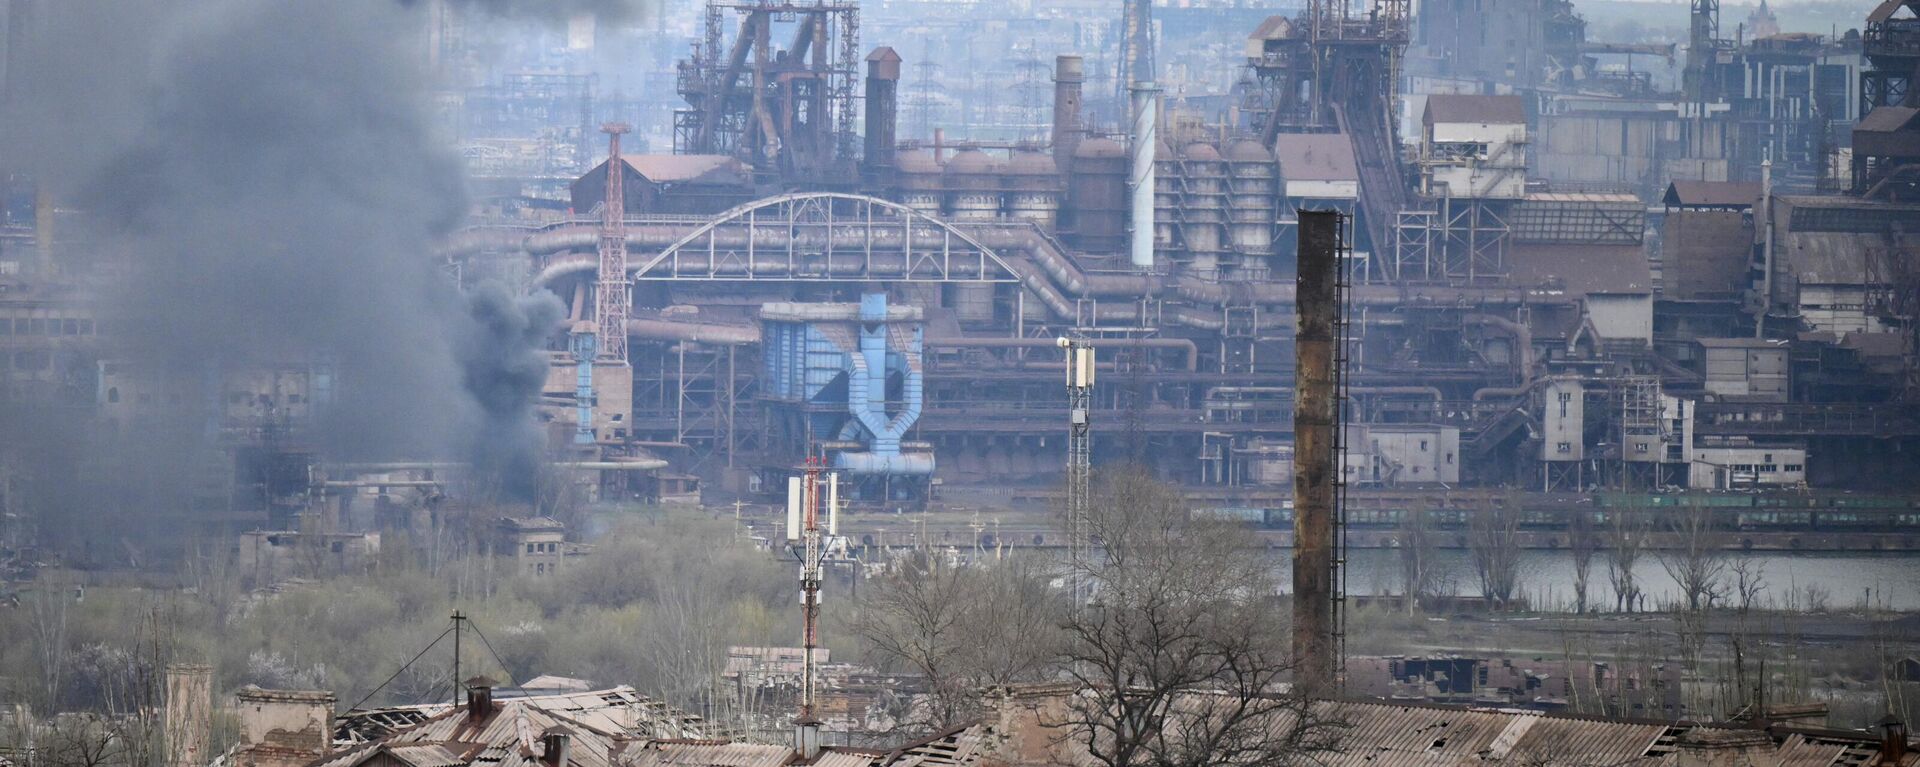 La planta de Azovstal en la ciudad ucraniana de Mariúpol - Sputnik Mundo, 1920, 31.05.2022